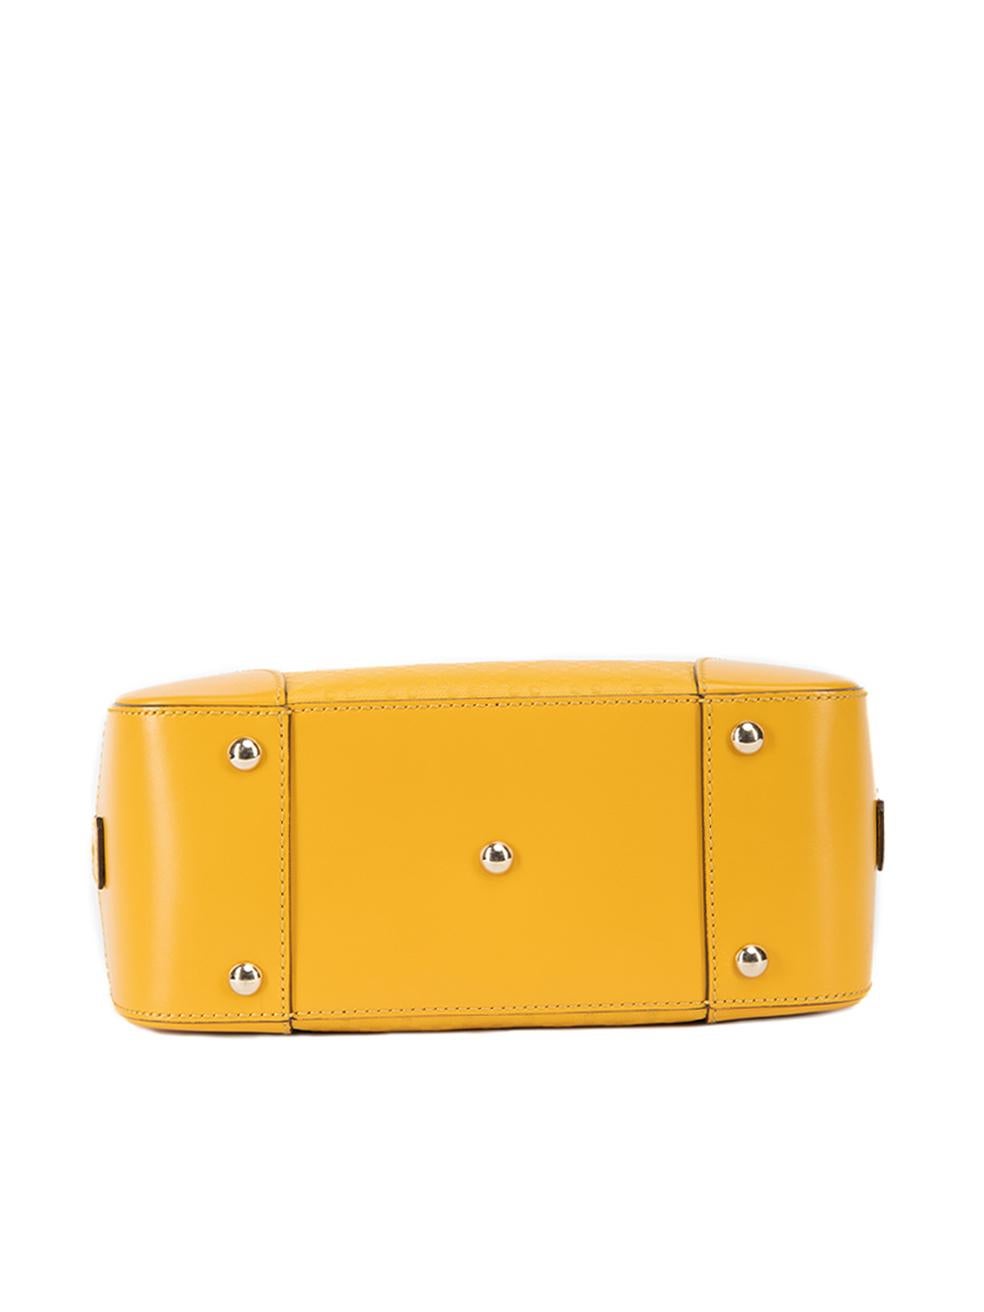 Gucci Women's Yellow Bright Diamante Leather Satchel 1